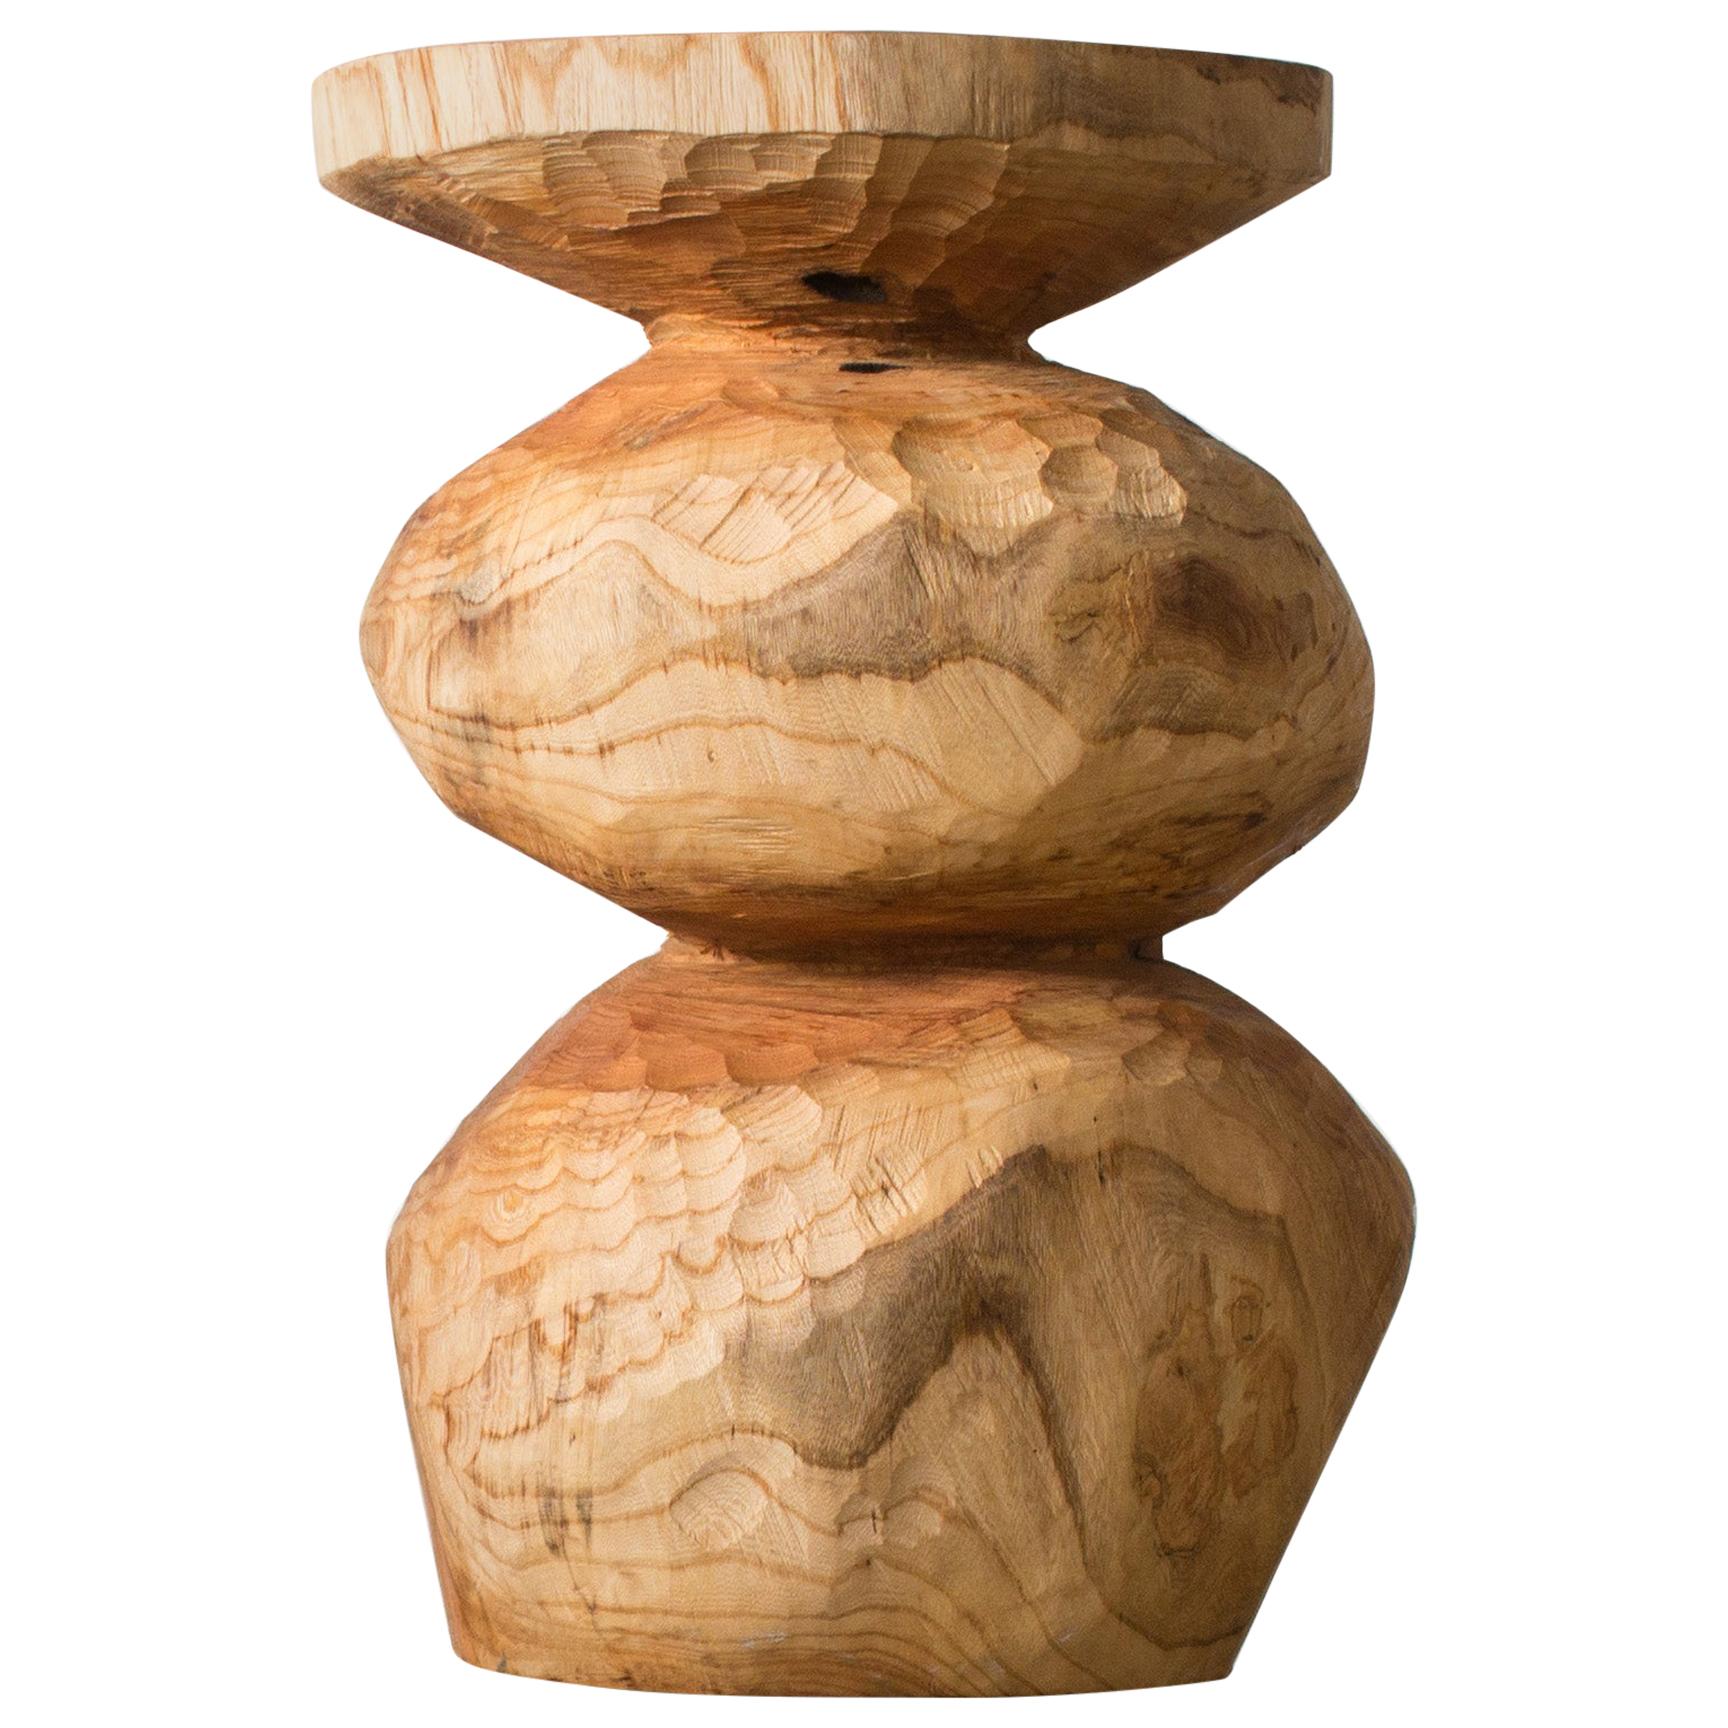 Hiroyuki Nishimura Furniture Sculptural Wood Stool10-09 Tribal Glamping For Sale